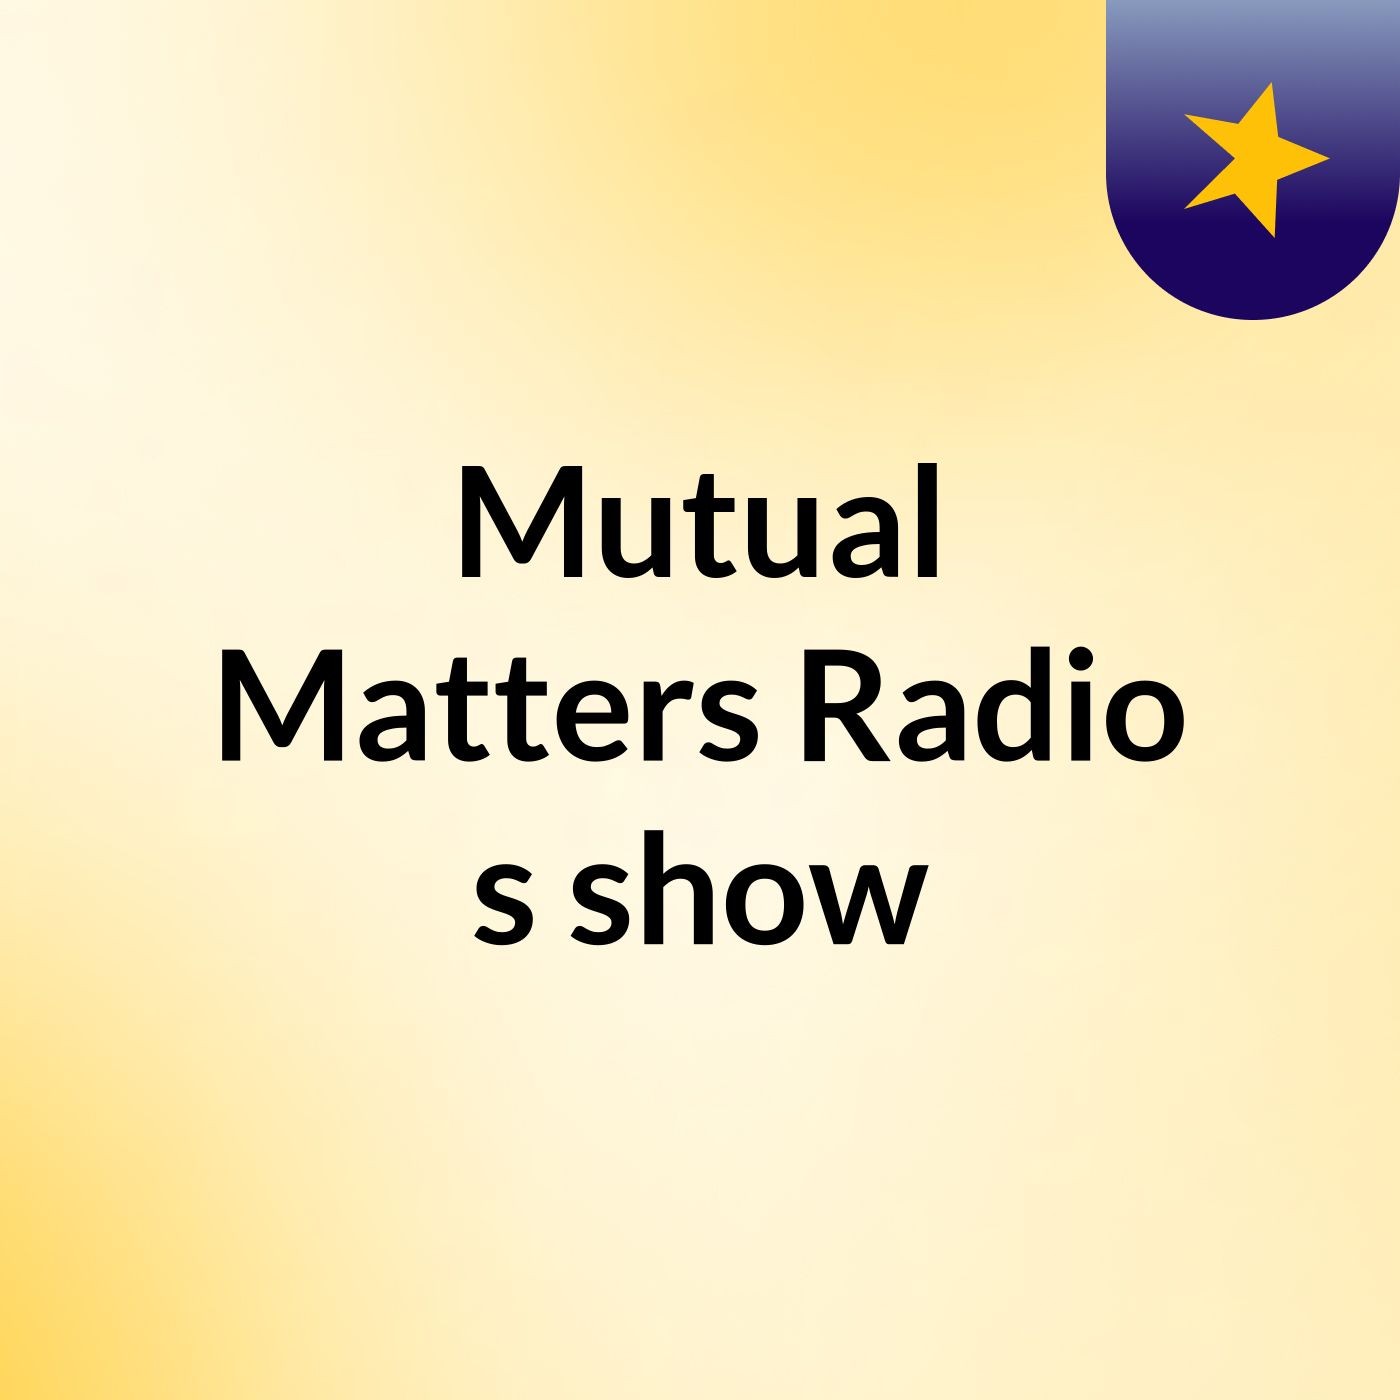 Mutual Matters Radio's show